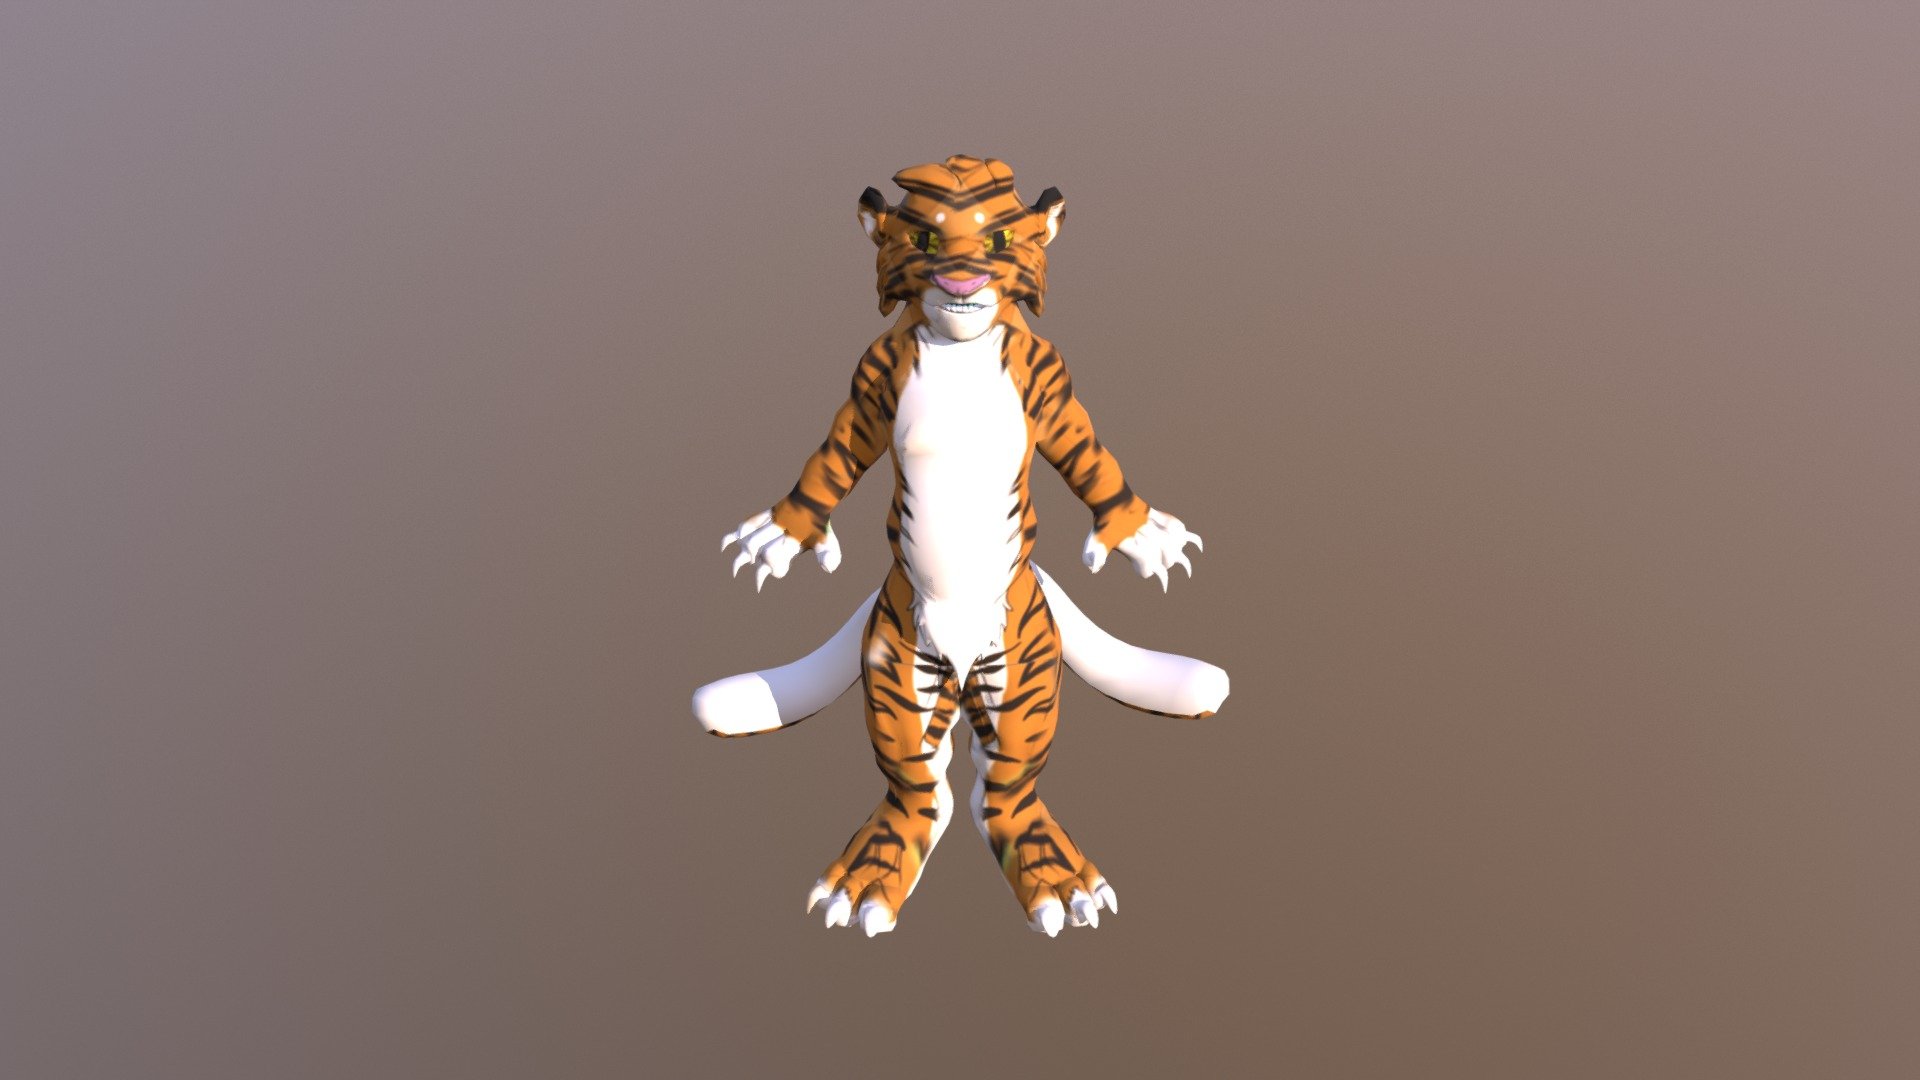 Cartoonis tiger for cartoon use - Cartoon Tiger - 3D model by Saad 3D Artist (@saadajmal) 3d model